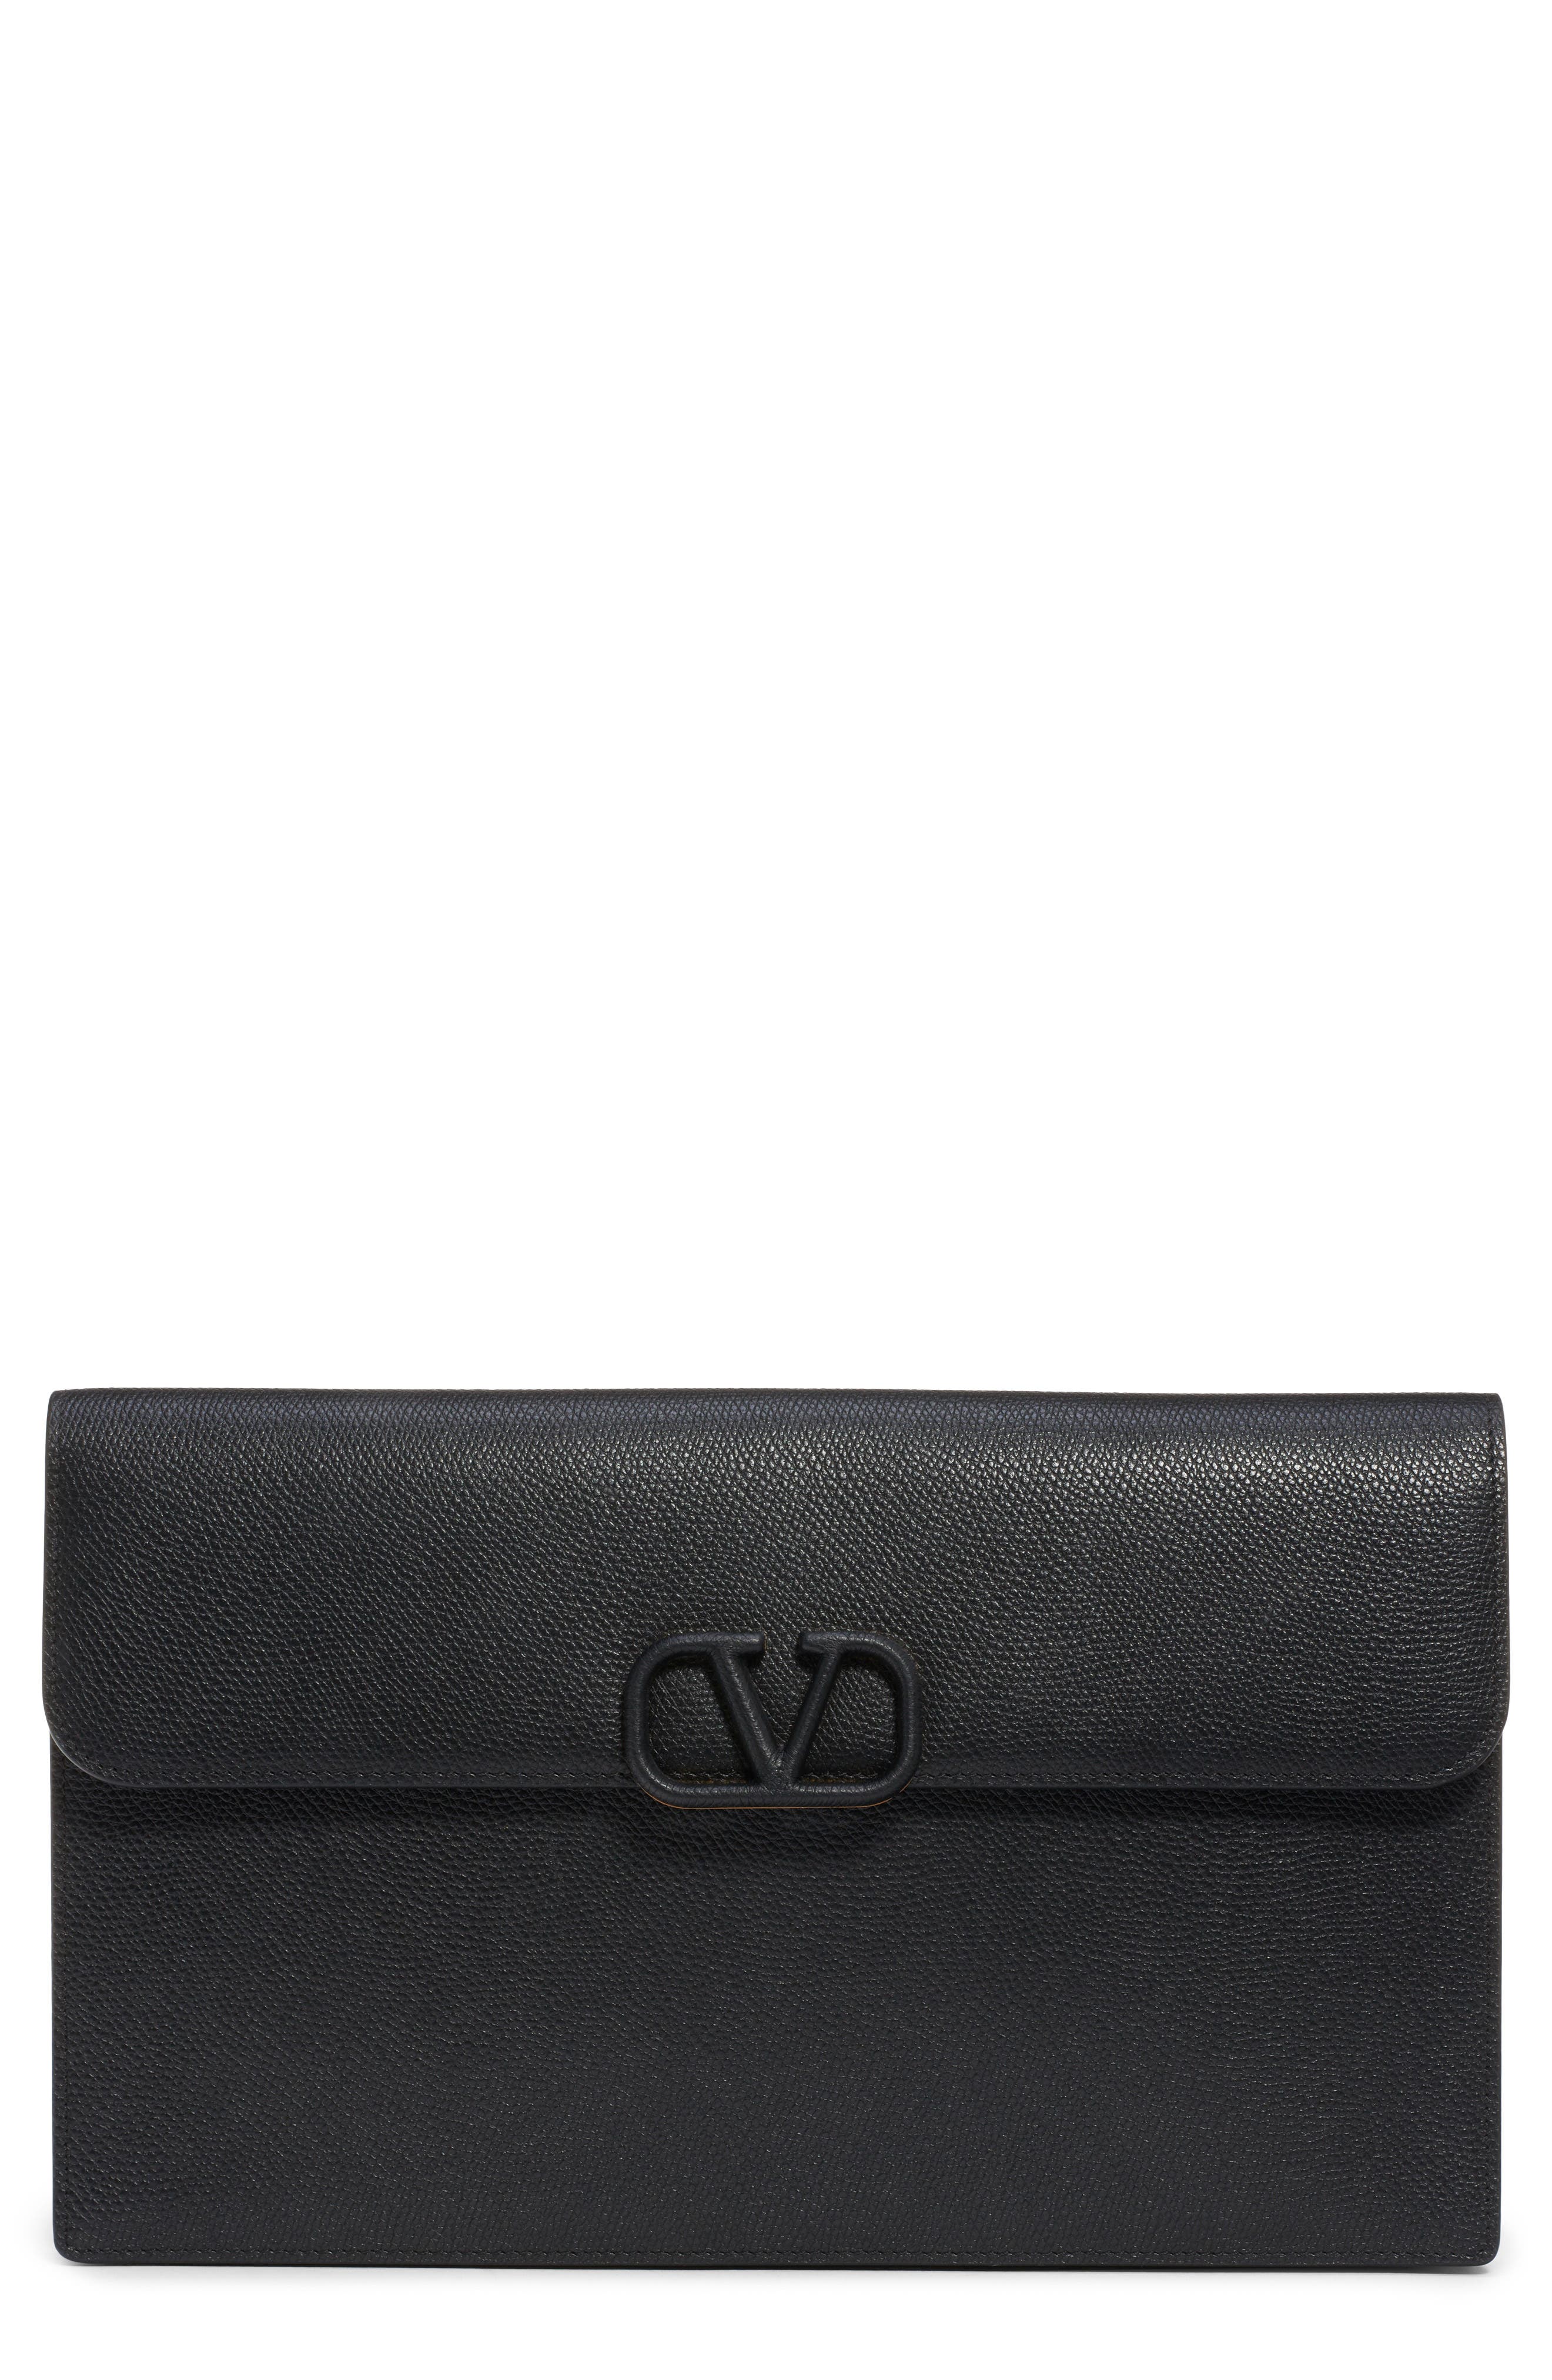 Valentino Garavani Large VSling Leather Flat Pouch in Nero